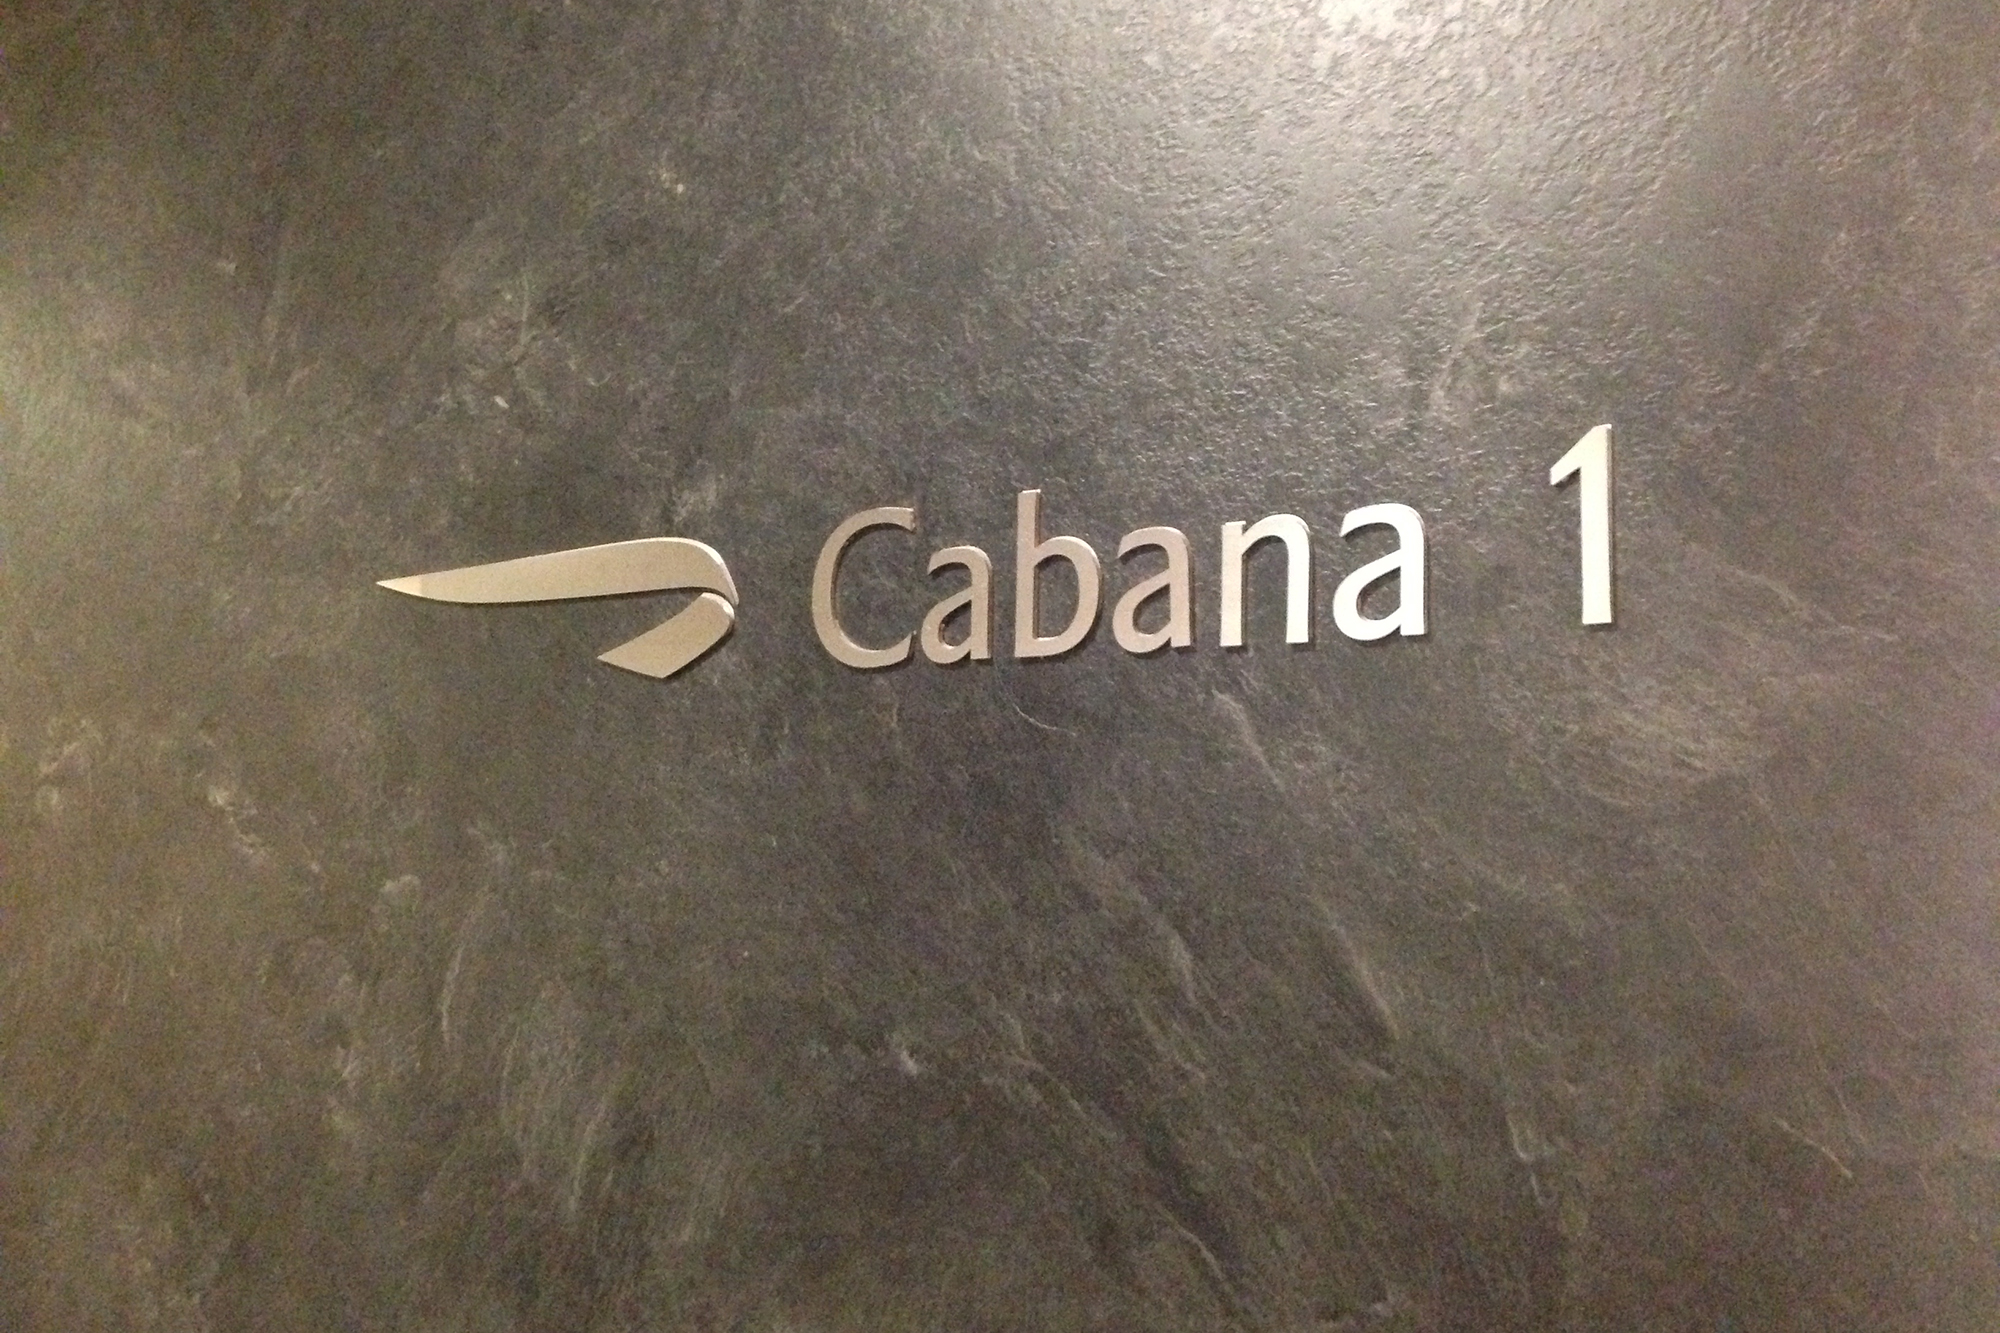 Cabana Sign.jpg